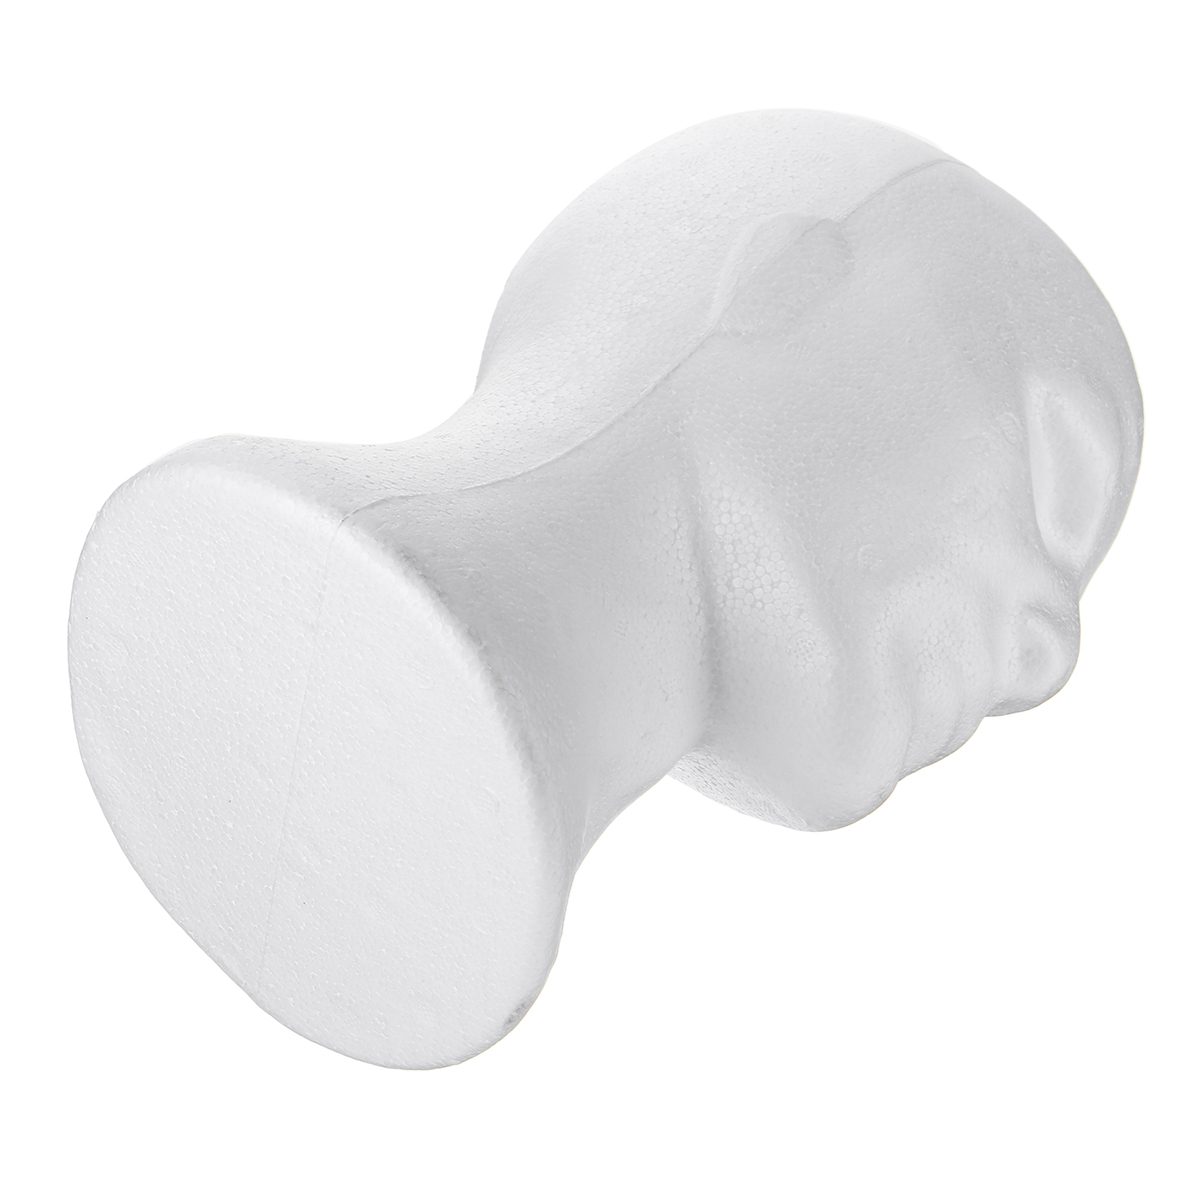 White-Female-Foam-Mannequin-Head-Model-Hat-Wig-Display-Stand-Rack-1386889